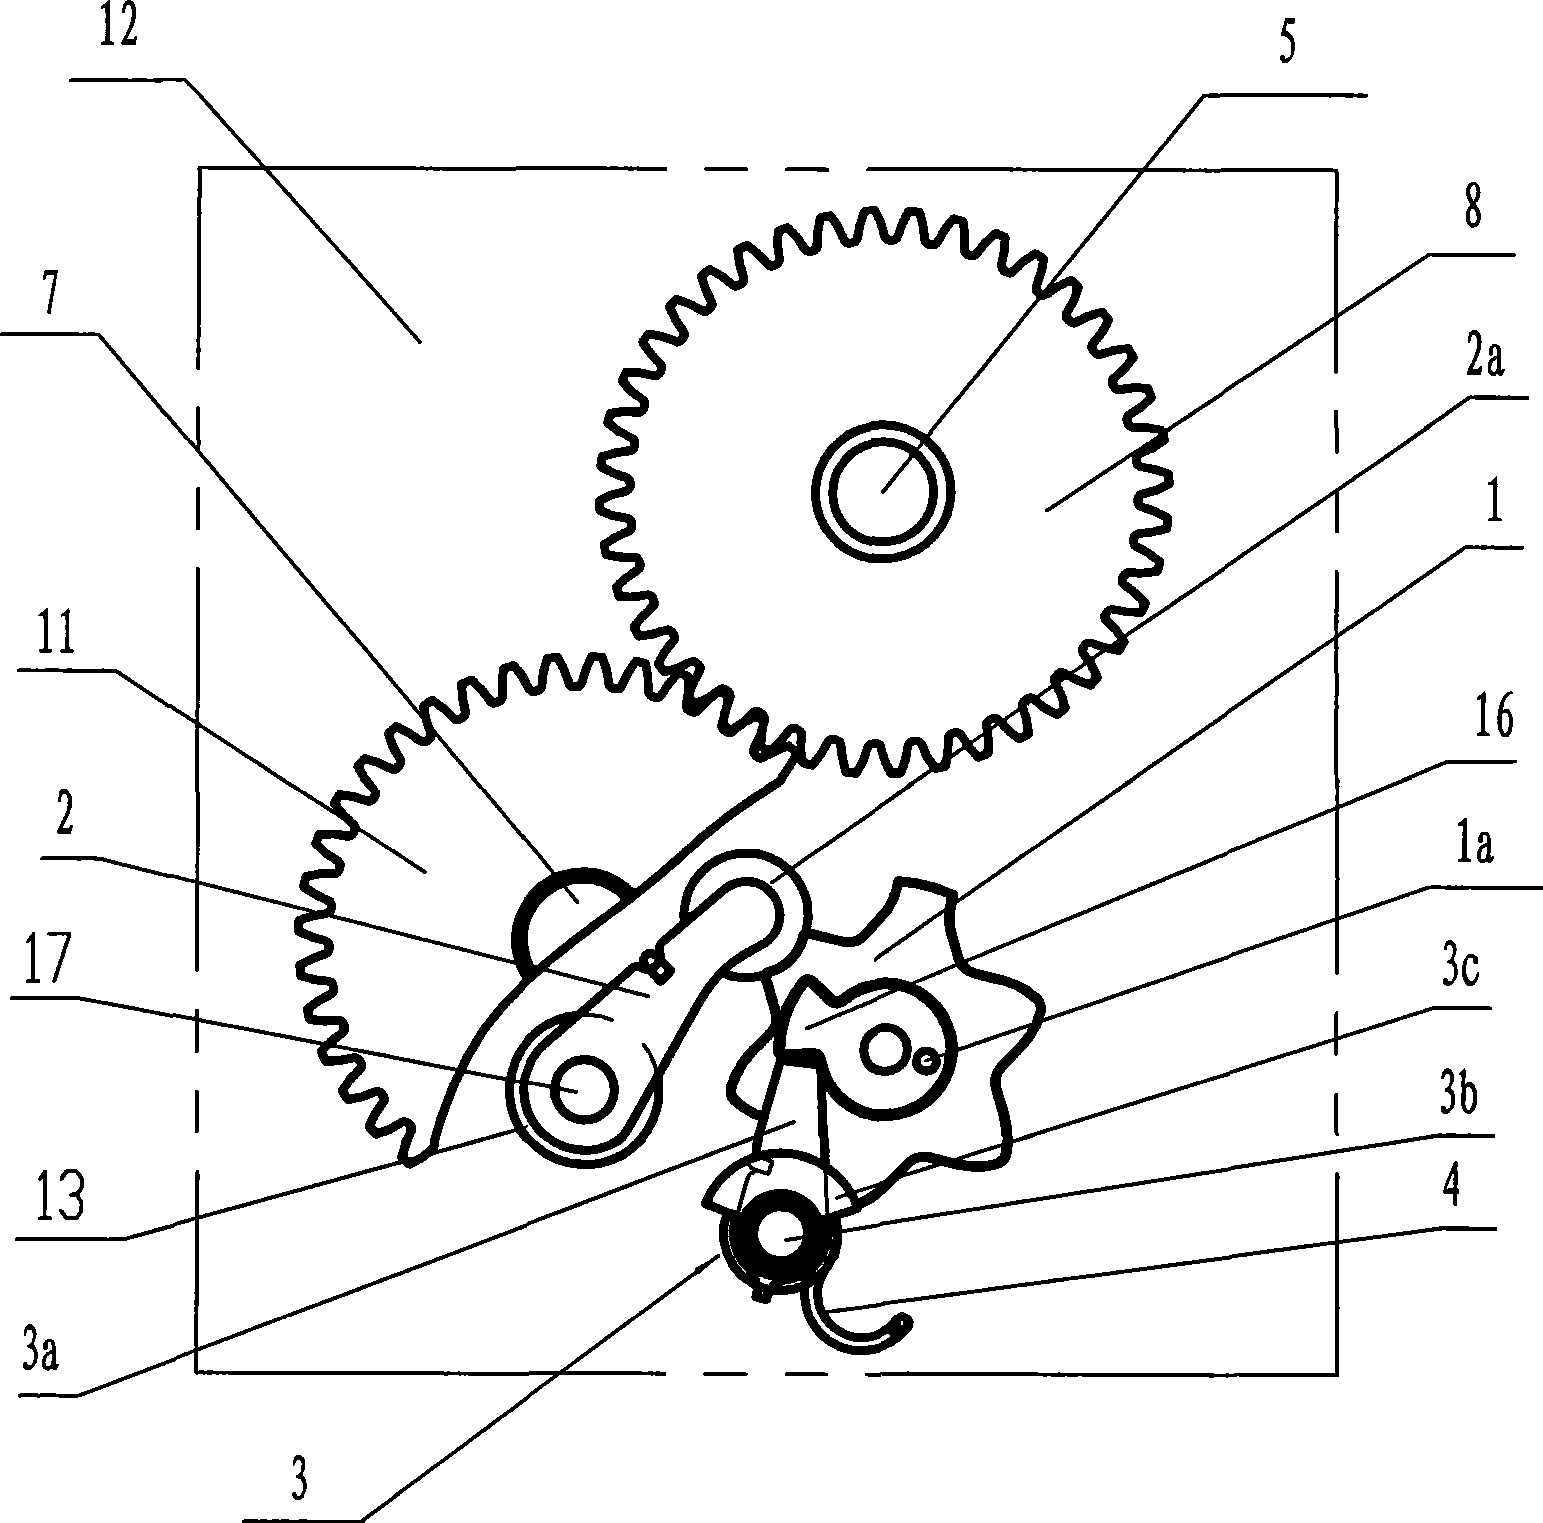 Reverse gear apparatus of motorcycle engine speed variator